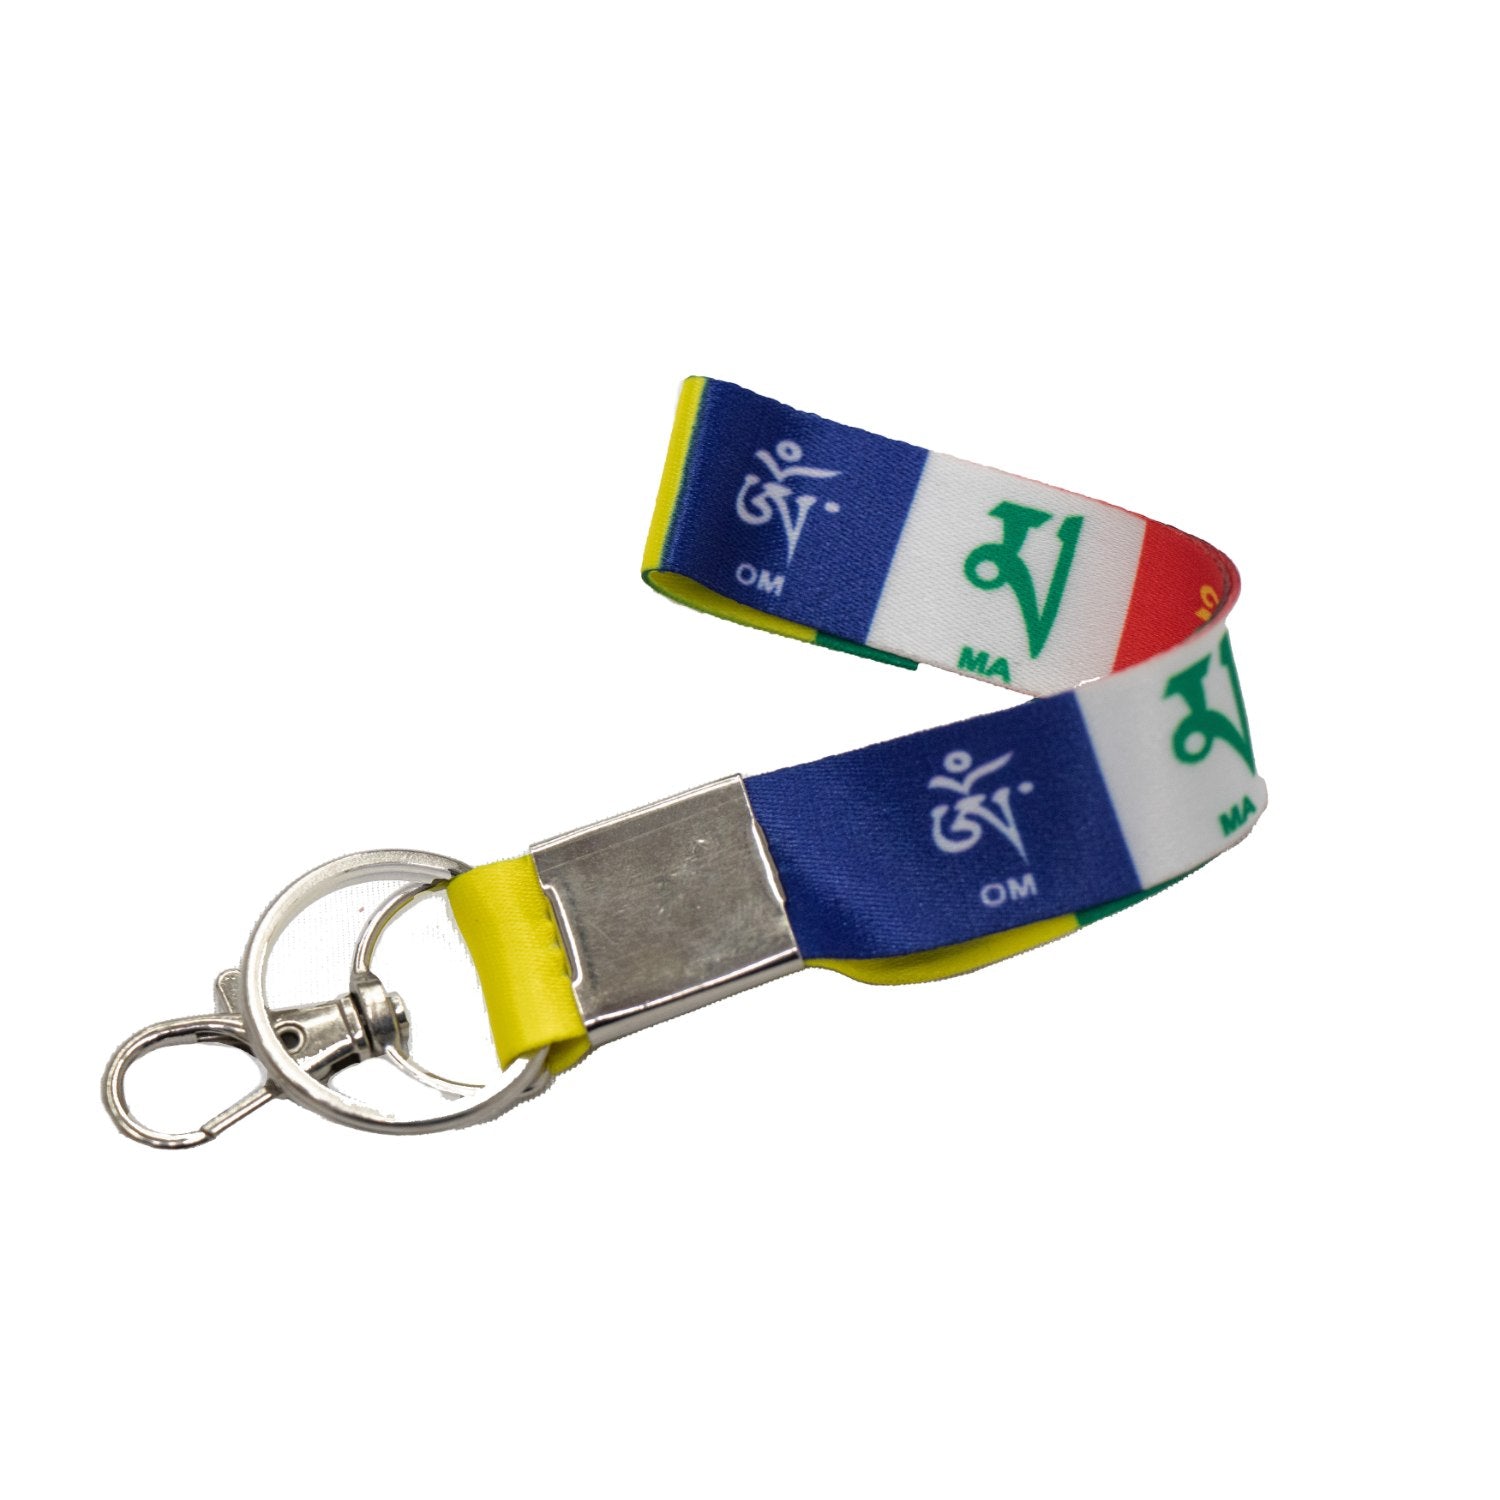 Buy Gokyo Key Chain - Buddhist Theme Wrist Loop | Souvenirs at Gokyo Outdoor Clothing & Gear